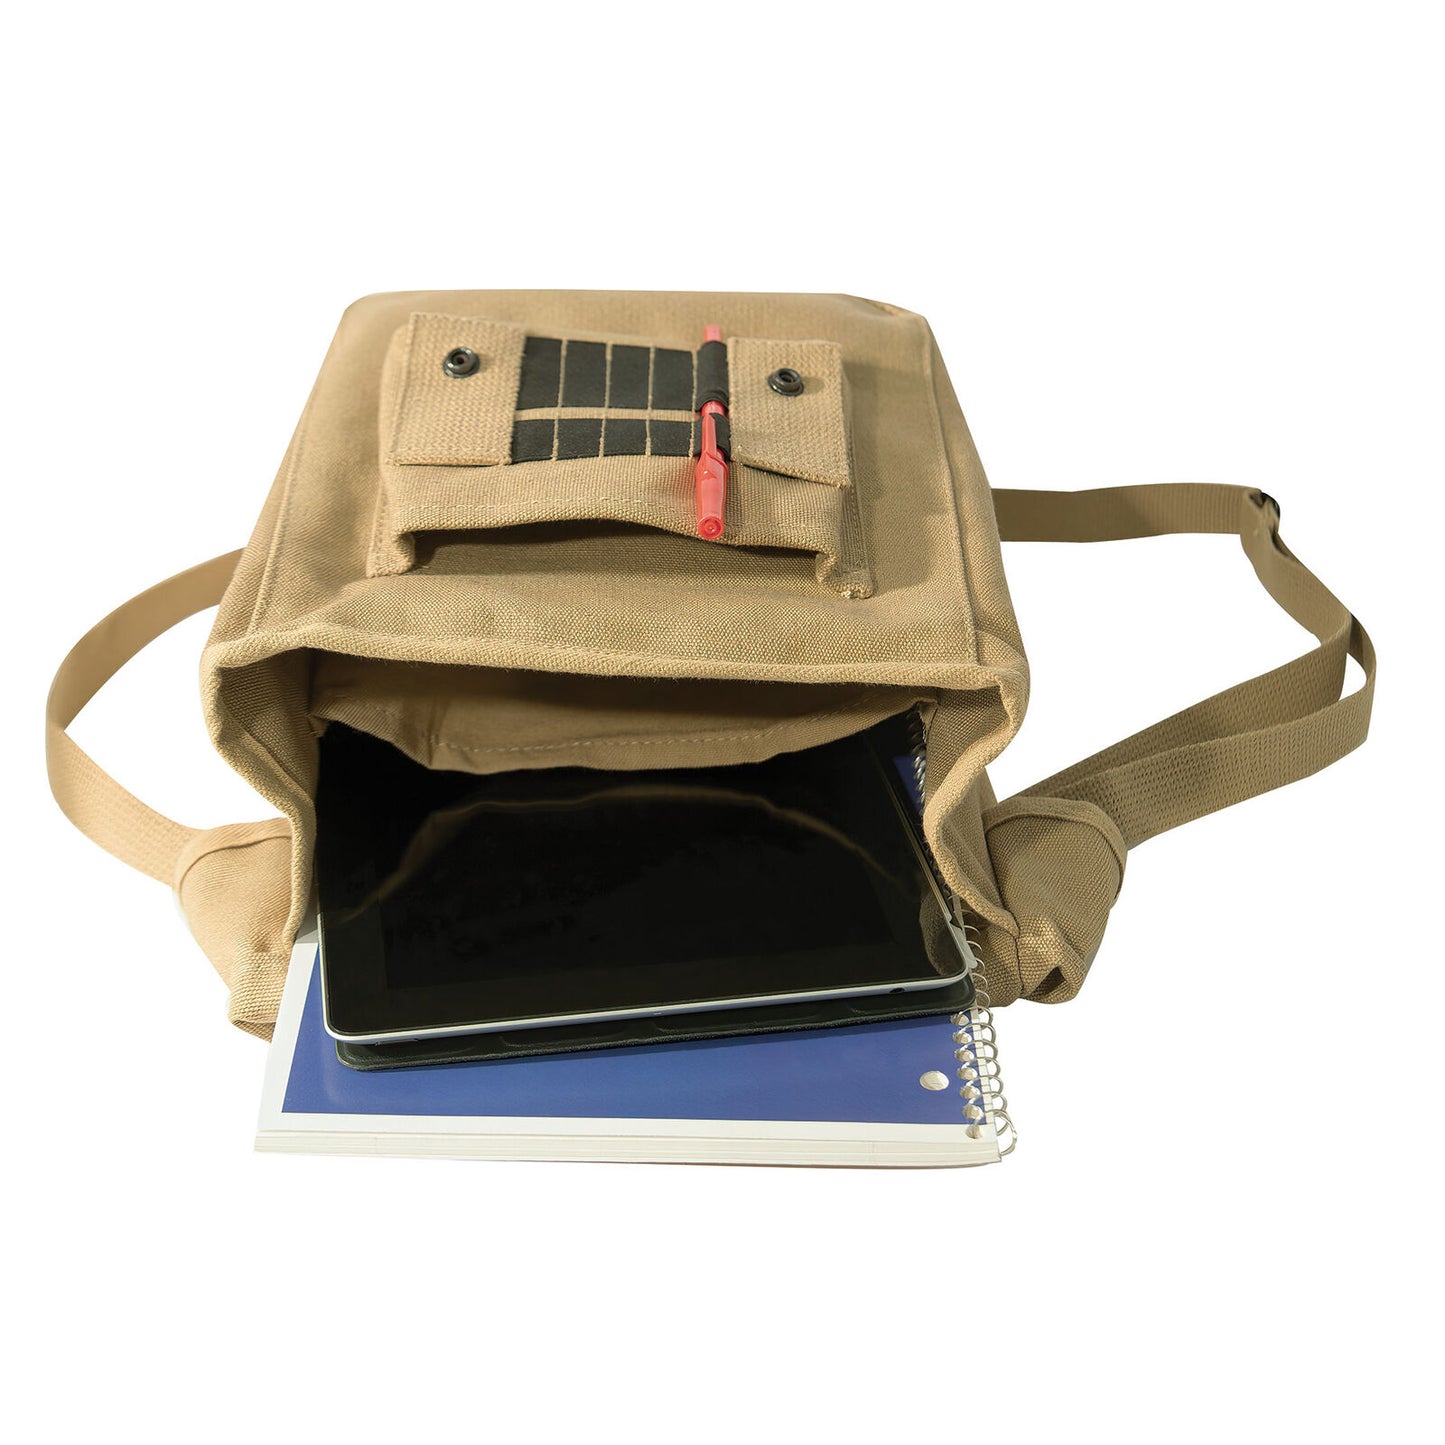 Rothco Canvas Map Case Shoulder Bag in Khaki - Messenger Travel Work School Bags